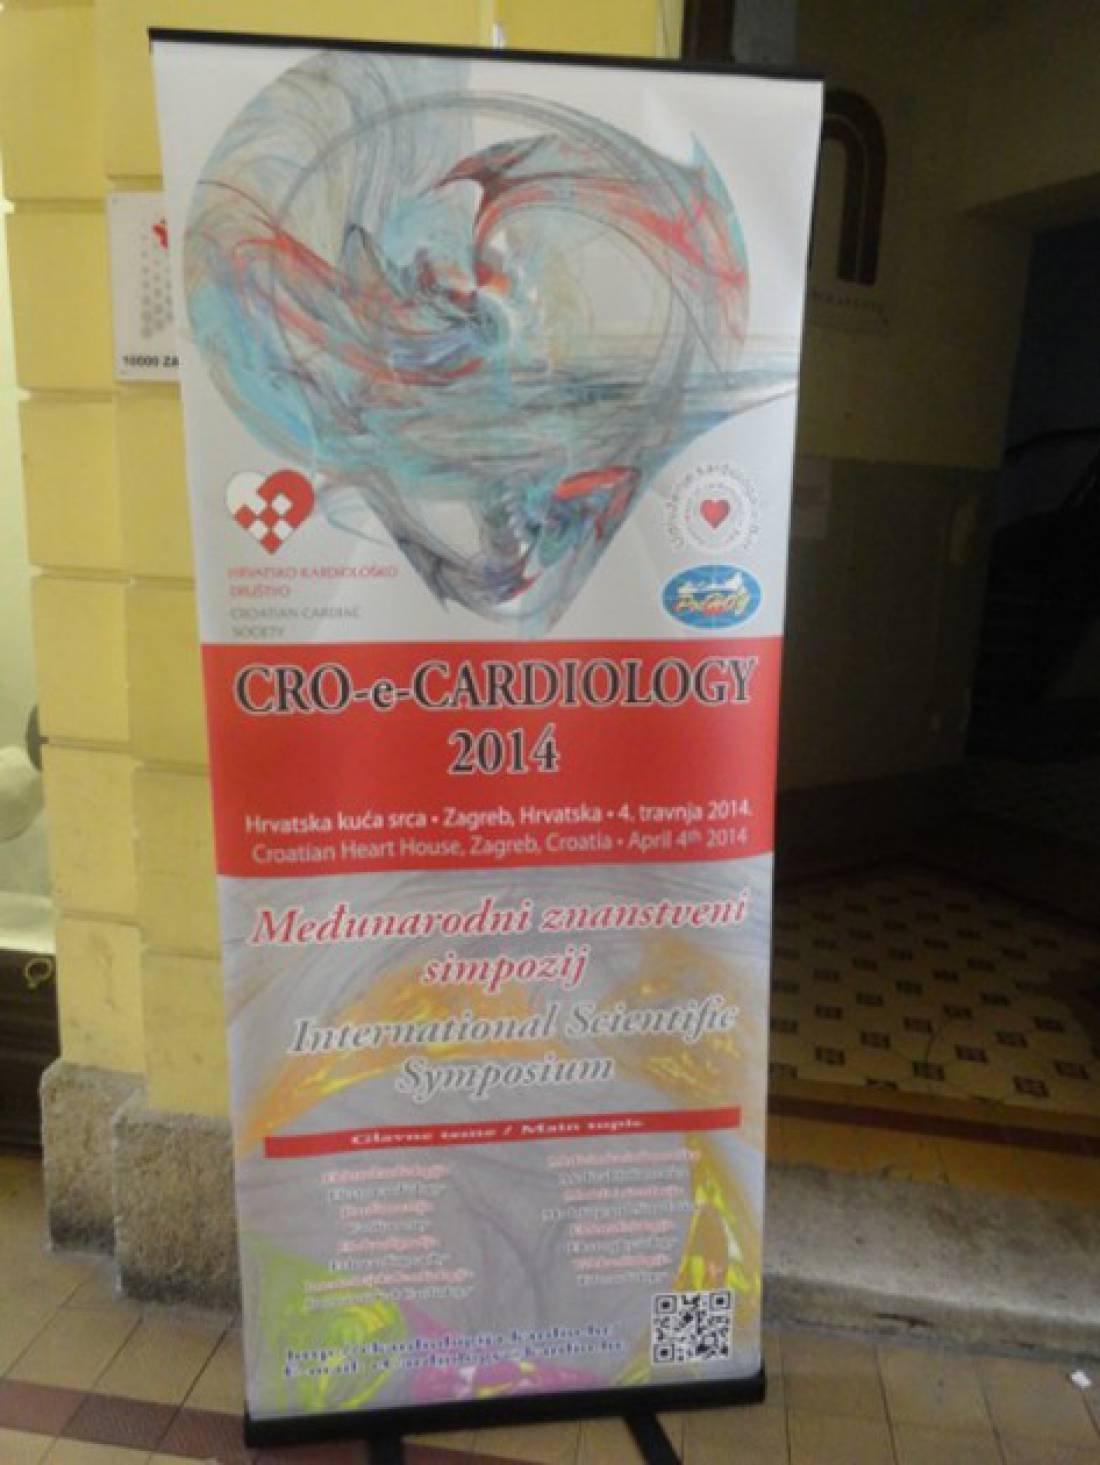 Međunarodni znanstveni simpozij CRO-e-CARDIOLOGY 2014